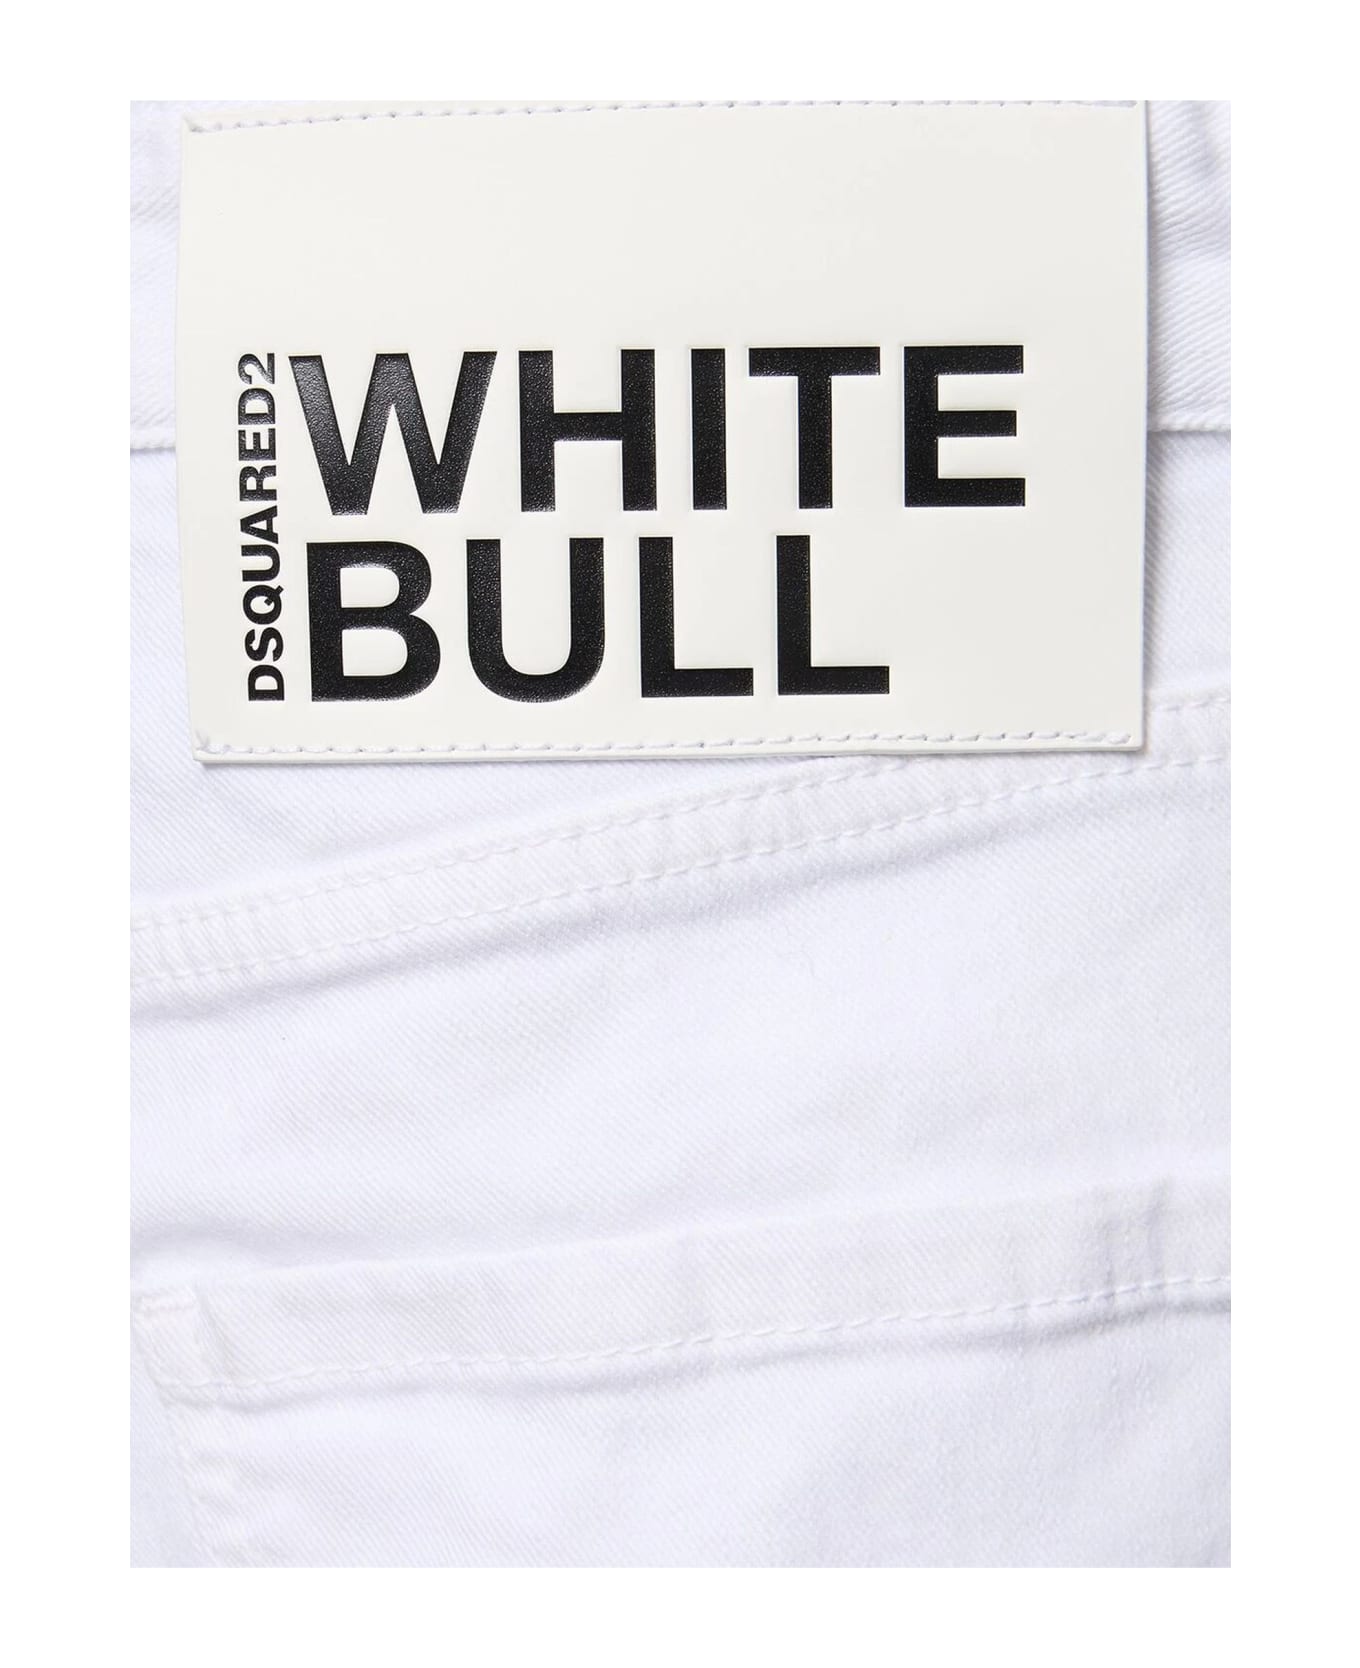 Dsquared2 Jeans White - Bianco